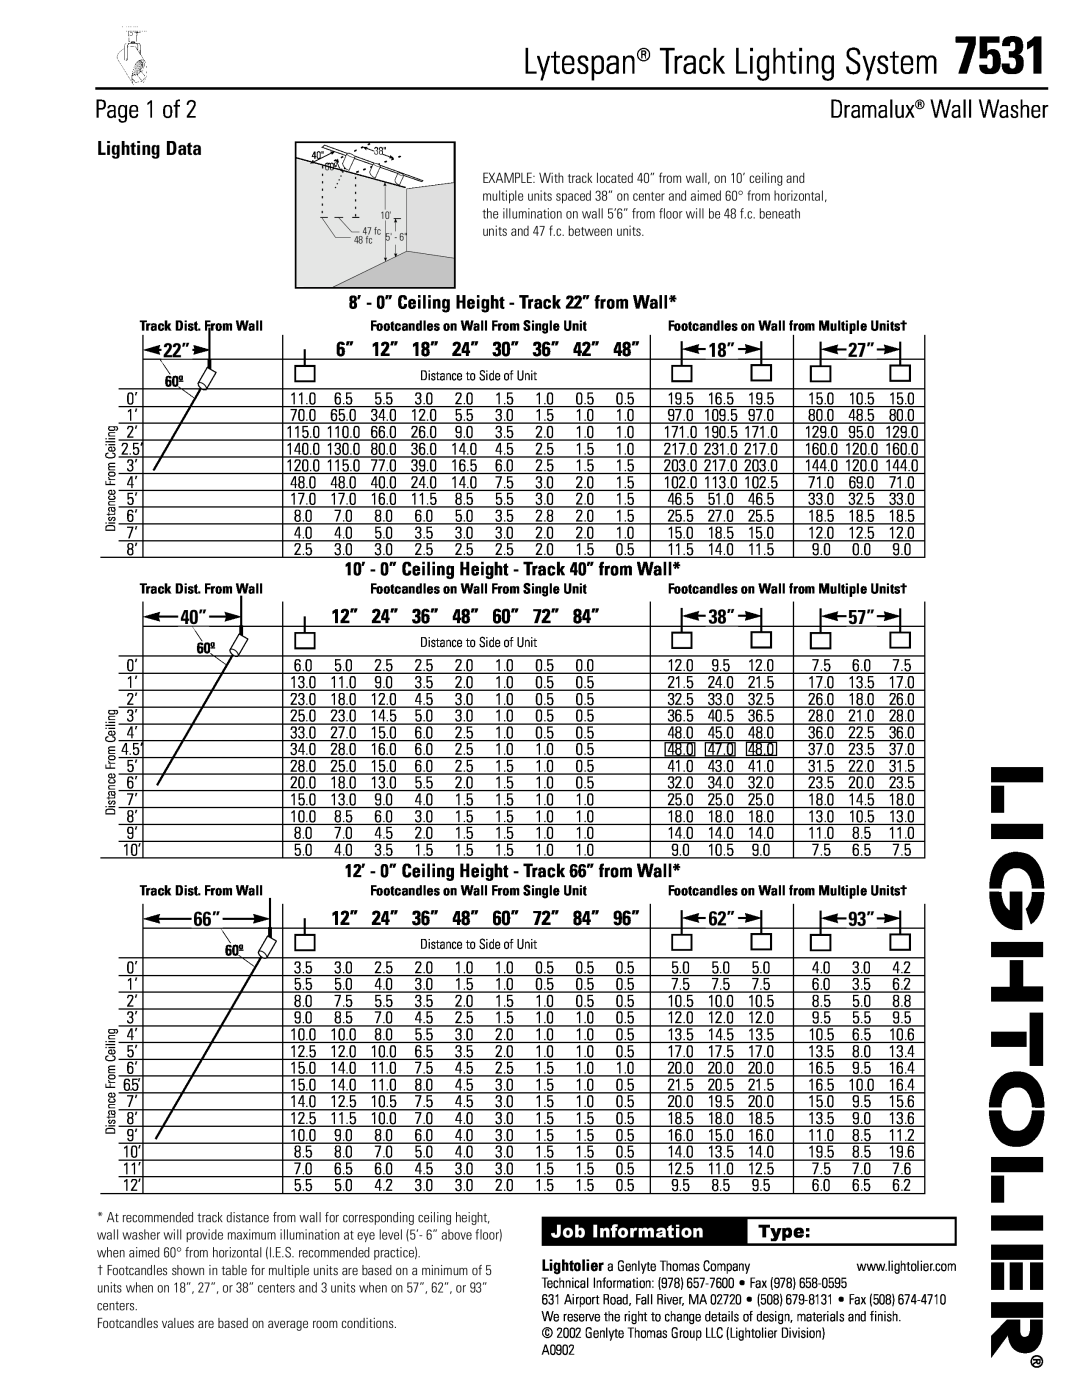 Lightolier 7531 manual Dramalux Wall Washer, Lytespan Track Lighting System, Page 1 of, Lighting Data 